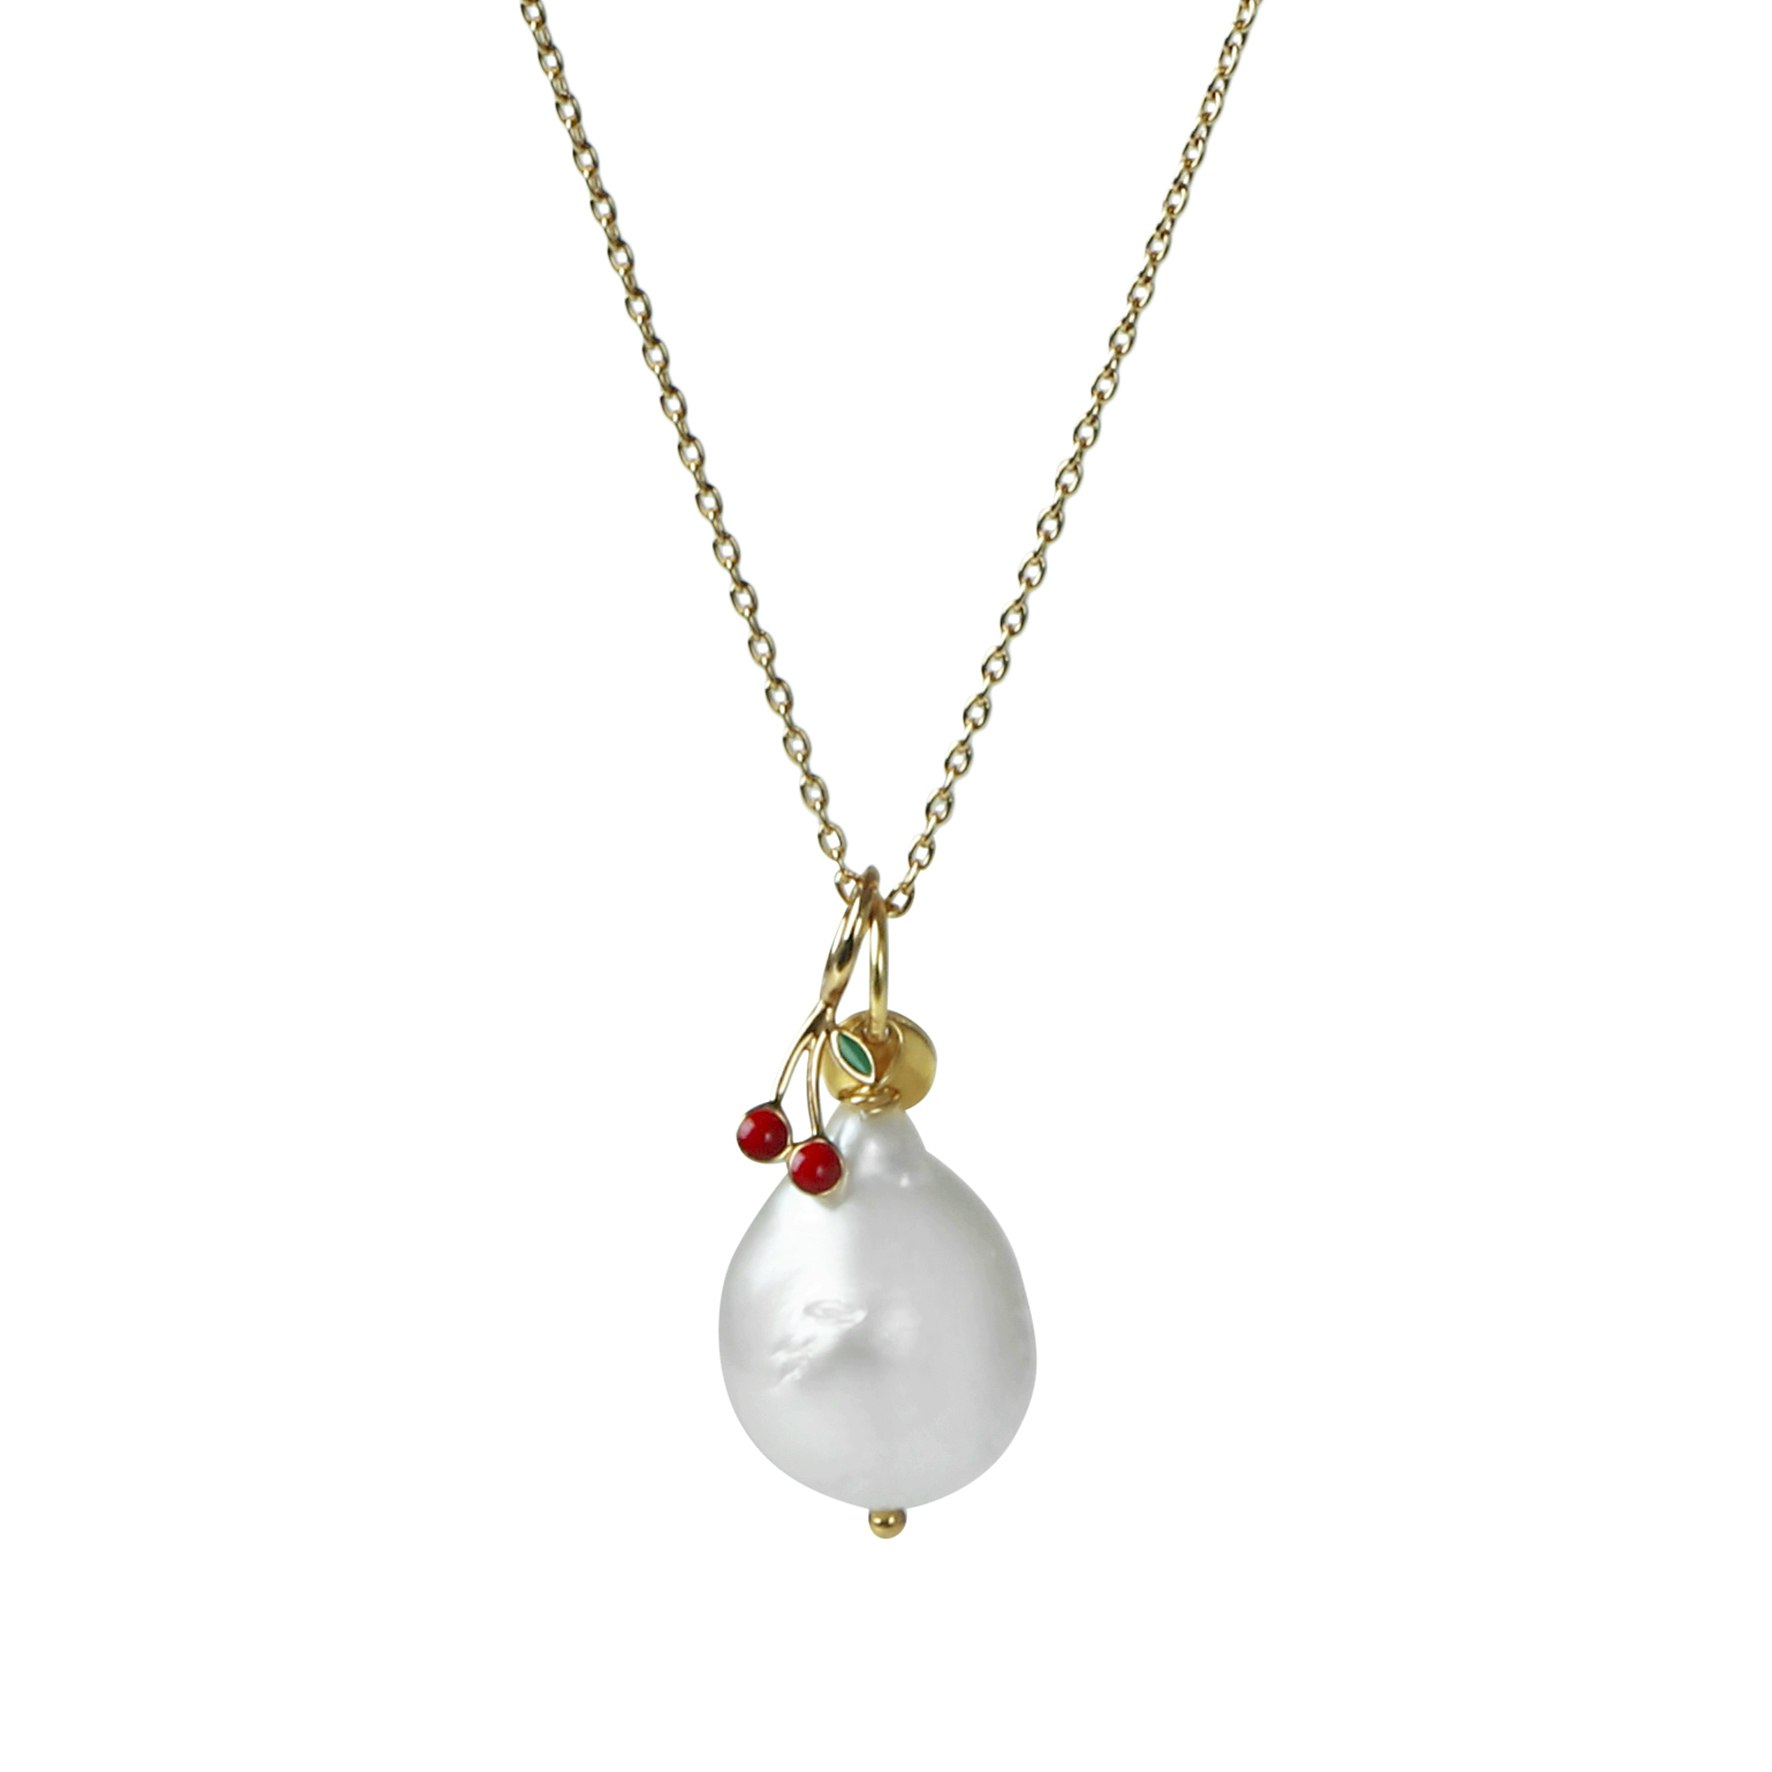 Baroque Pearl Pendant fra STINE A Jewelry i Forgyldt-Sølv Sterling 925